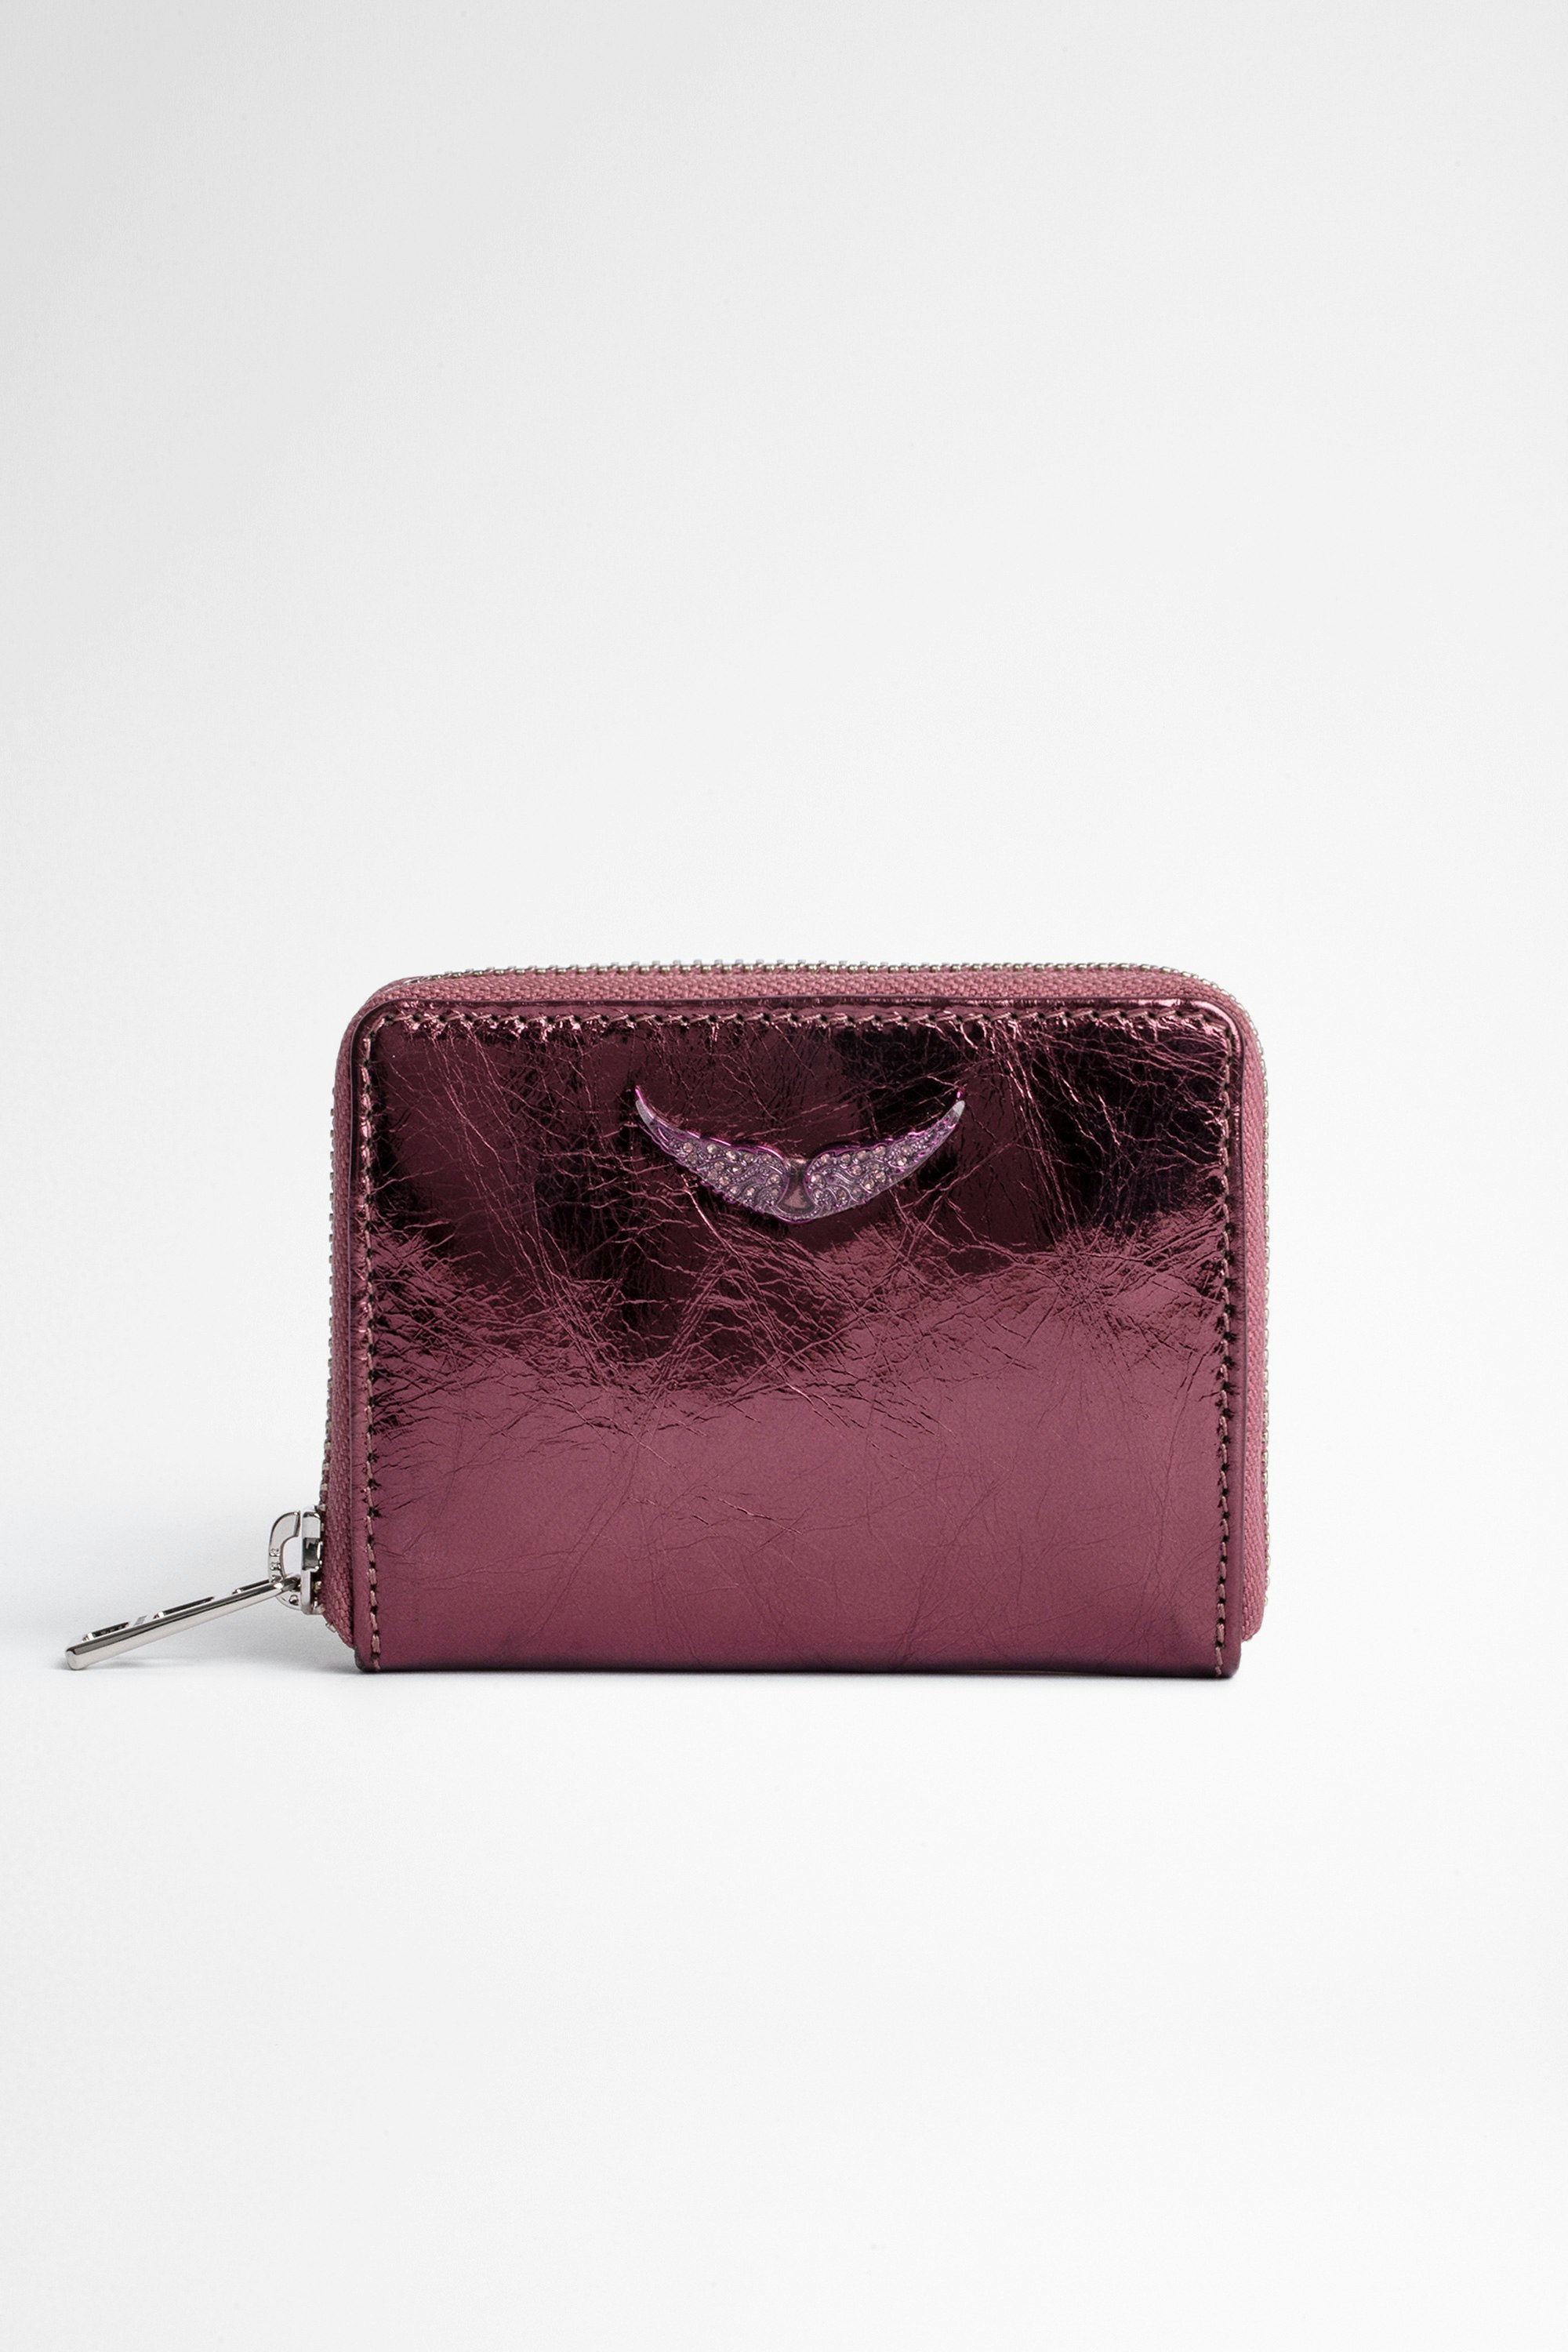 ZV Mini 財布 Women's metallic leather wallet